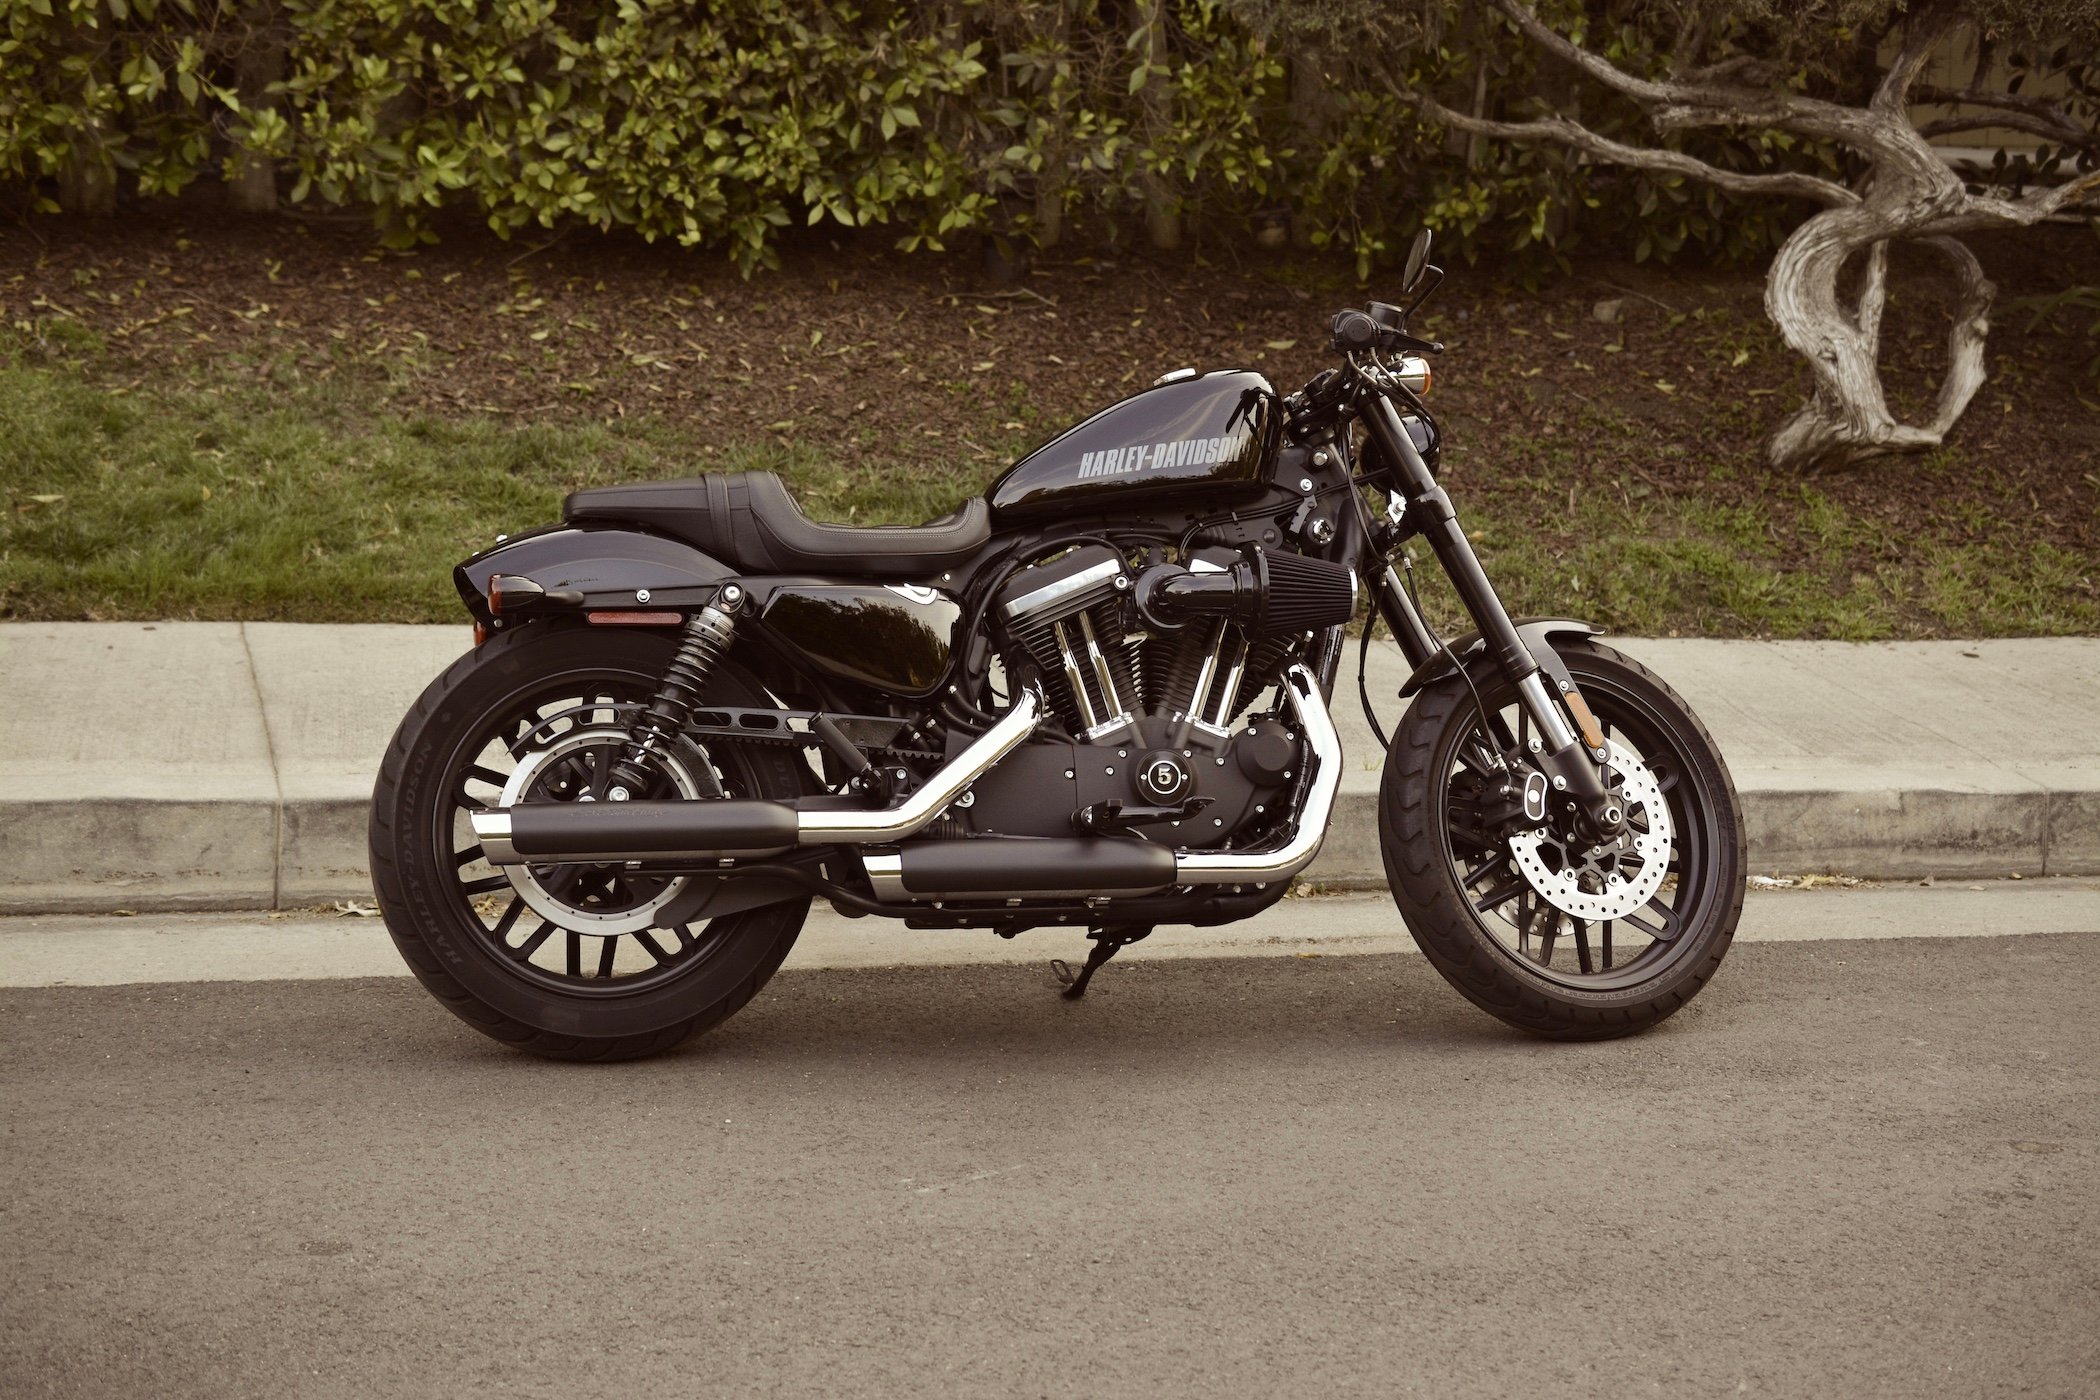 The Petrolhead Corner - 67 Years of the Iconic Harley Davidson